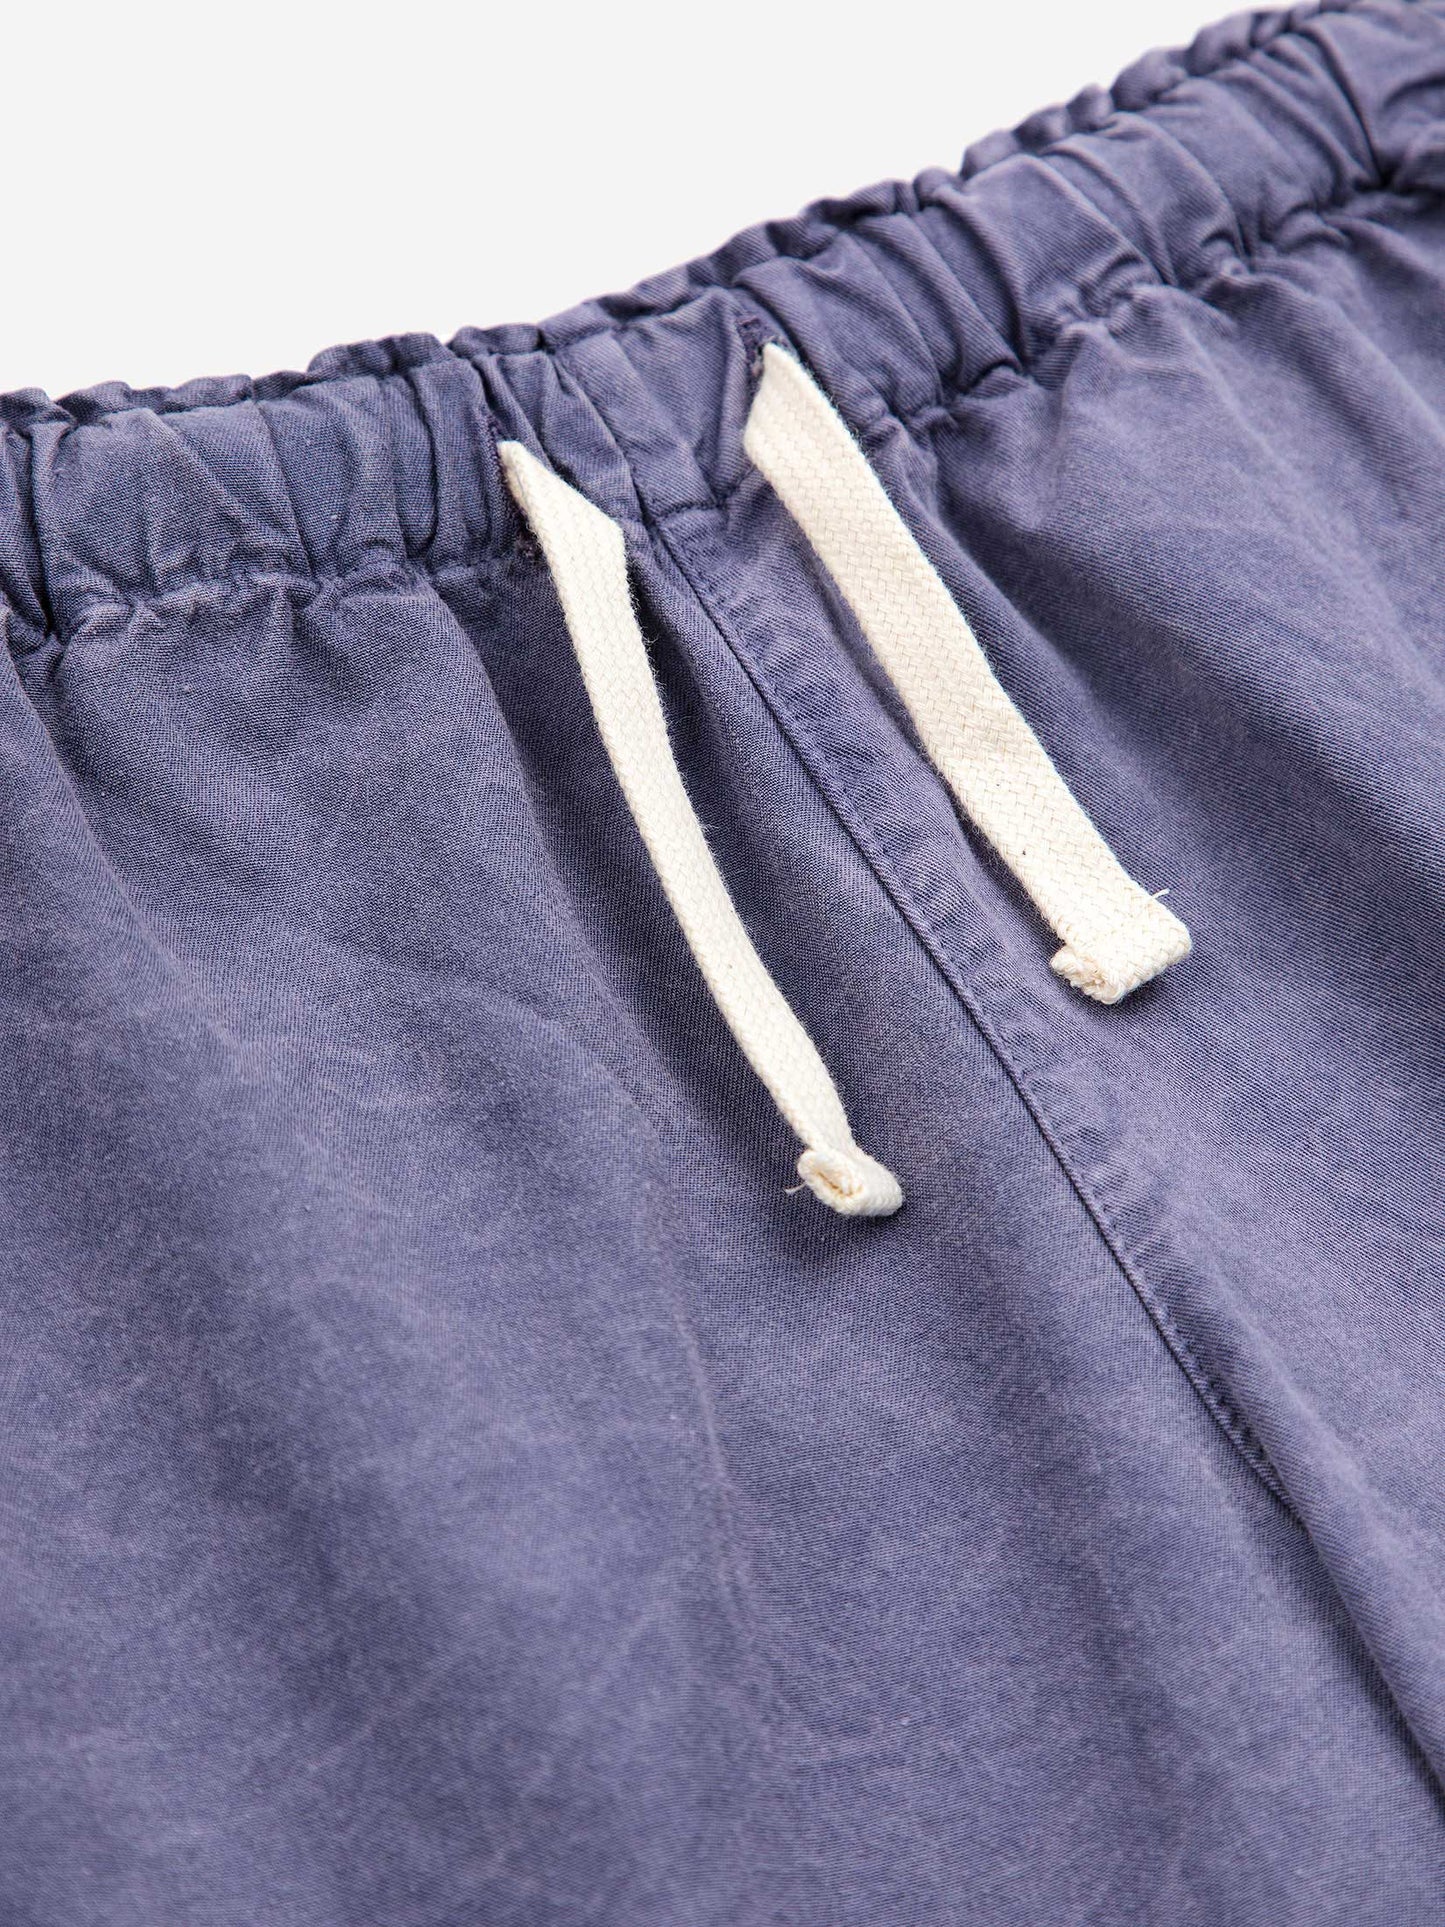 Circle Woven Bermuda Shorts by Bobo Choses. 100% BCI cotton Prussian blue Bermuda style shorts with Bobo Choses circle decal.